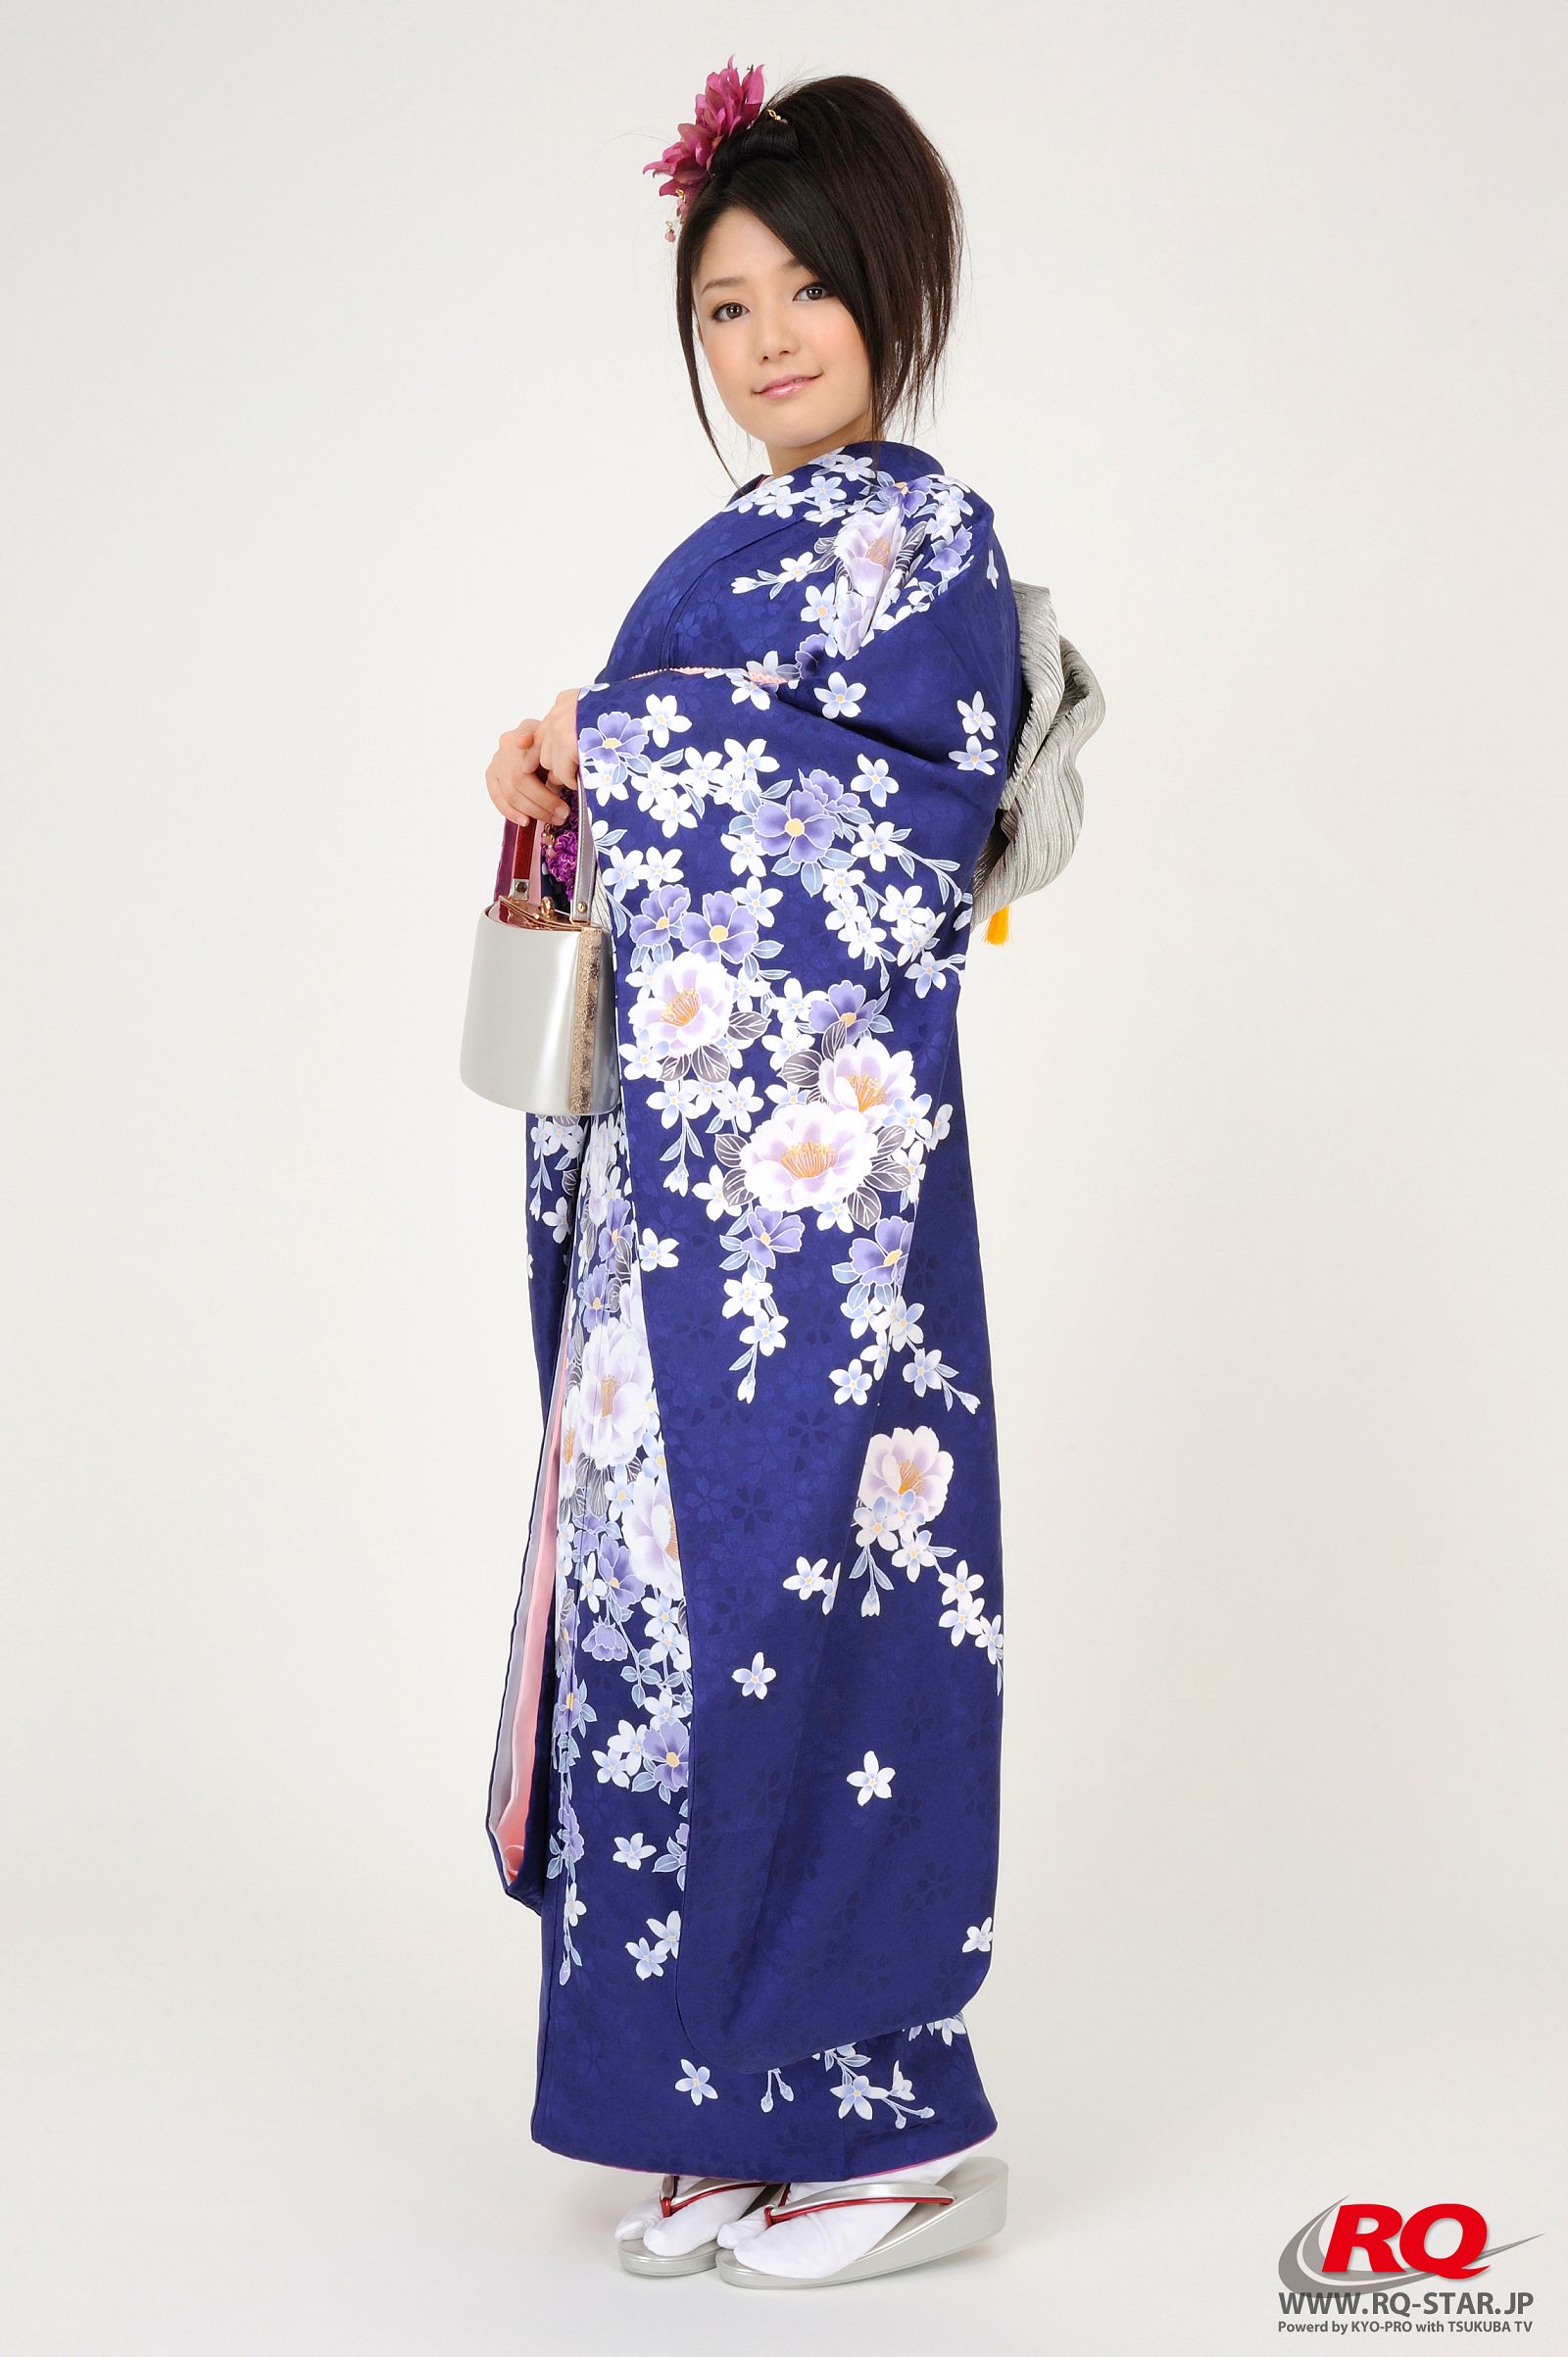 [RQ-STAR美女] NO.0068 Hitomi Furusaki 古崎瞳 謹賀新年 Kimono - Happy New Year2